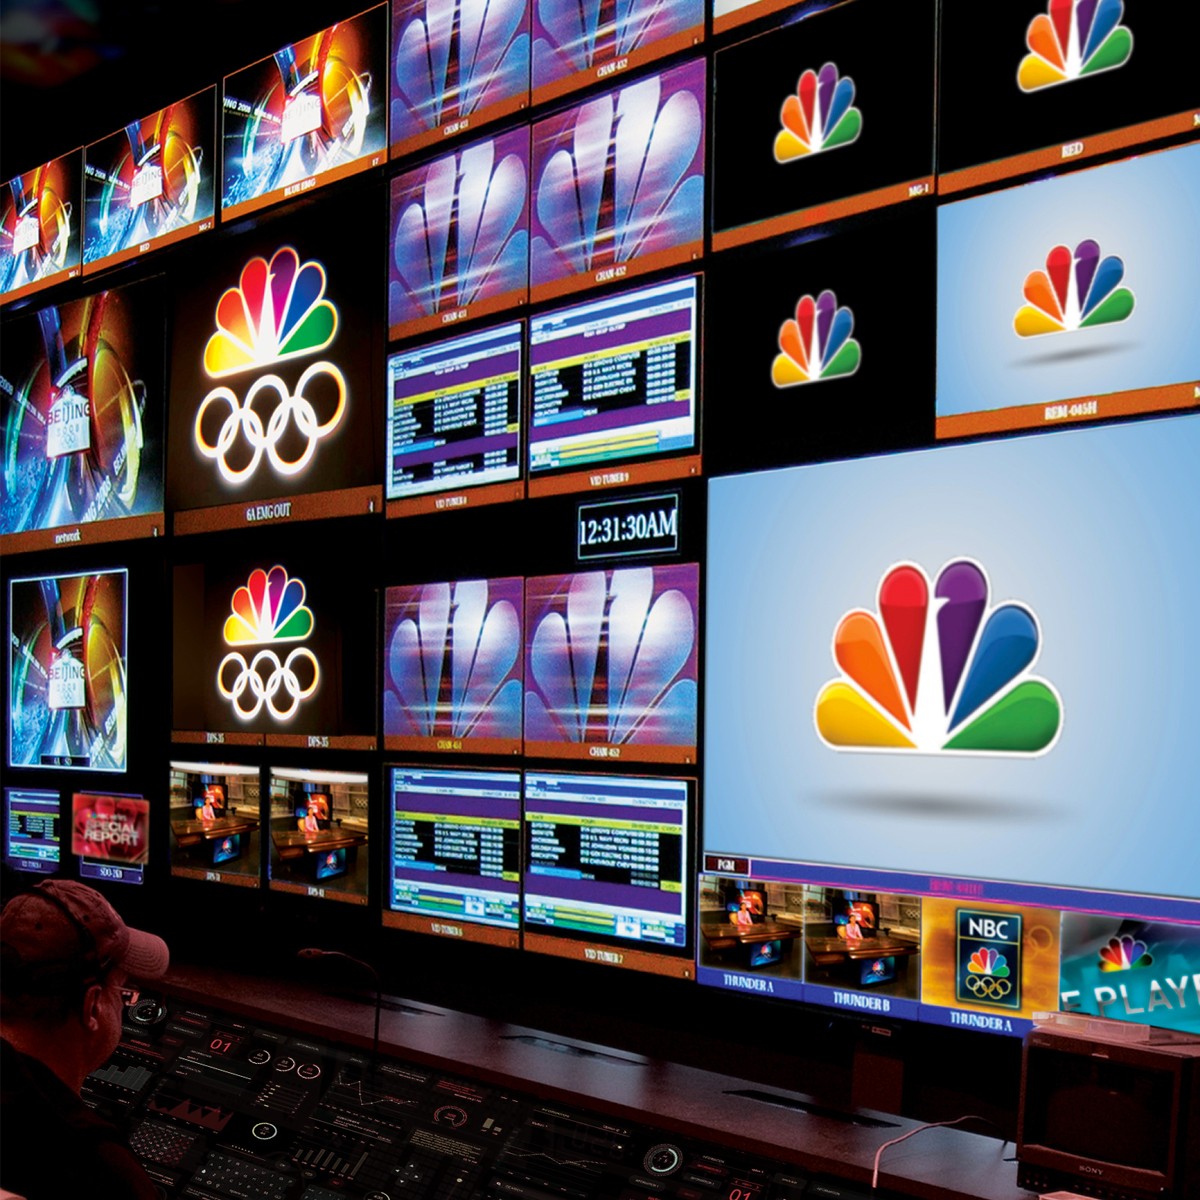 Marketing Strategy of NBC - NBC Control